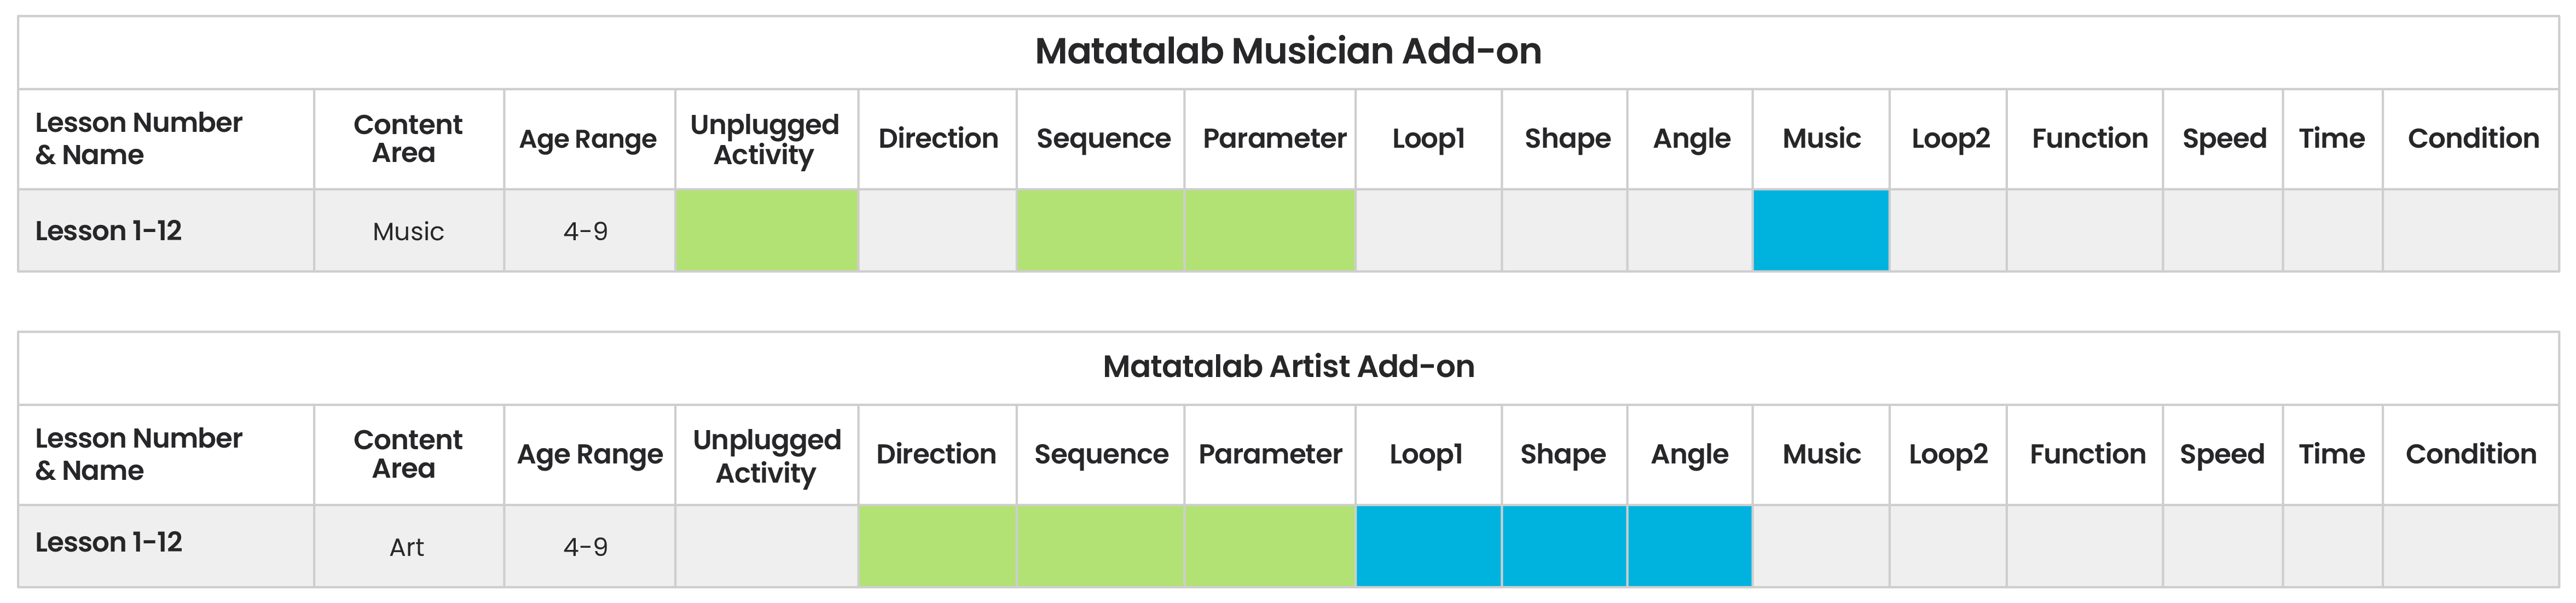 Matatalab music add on coding toys - Matatalab